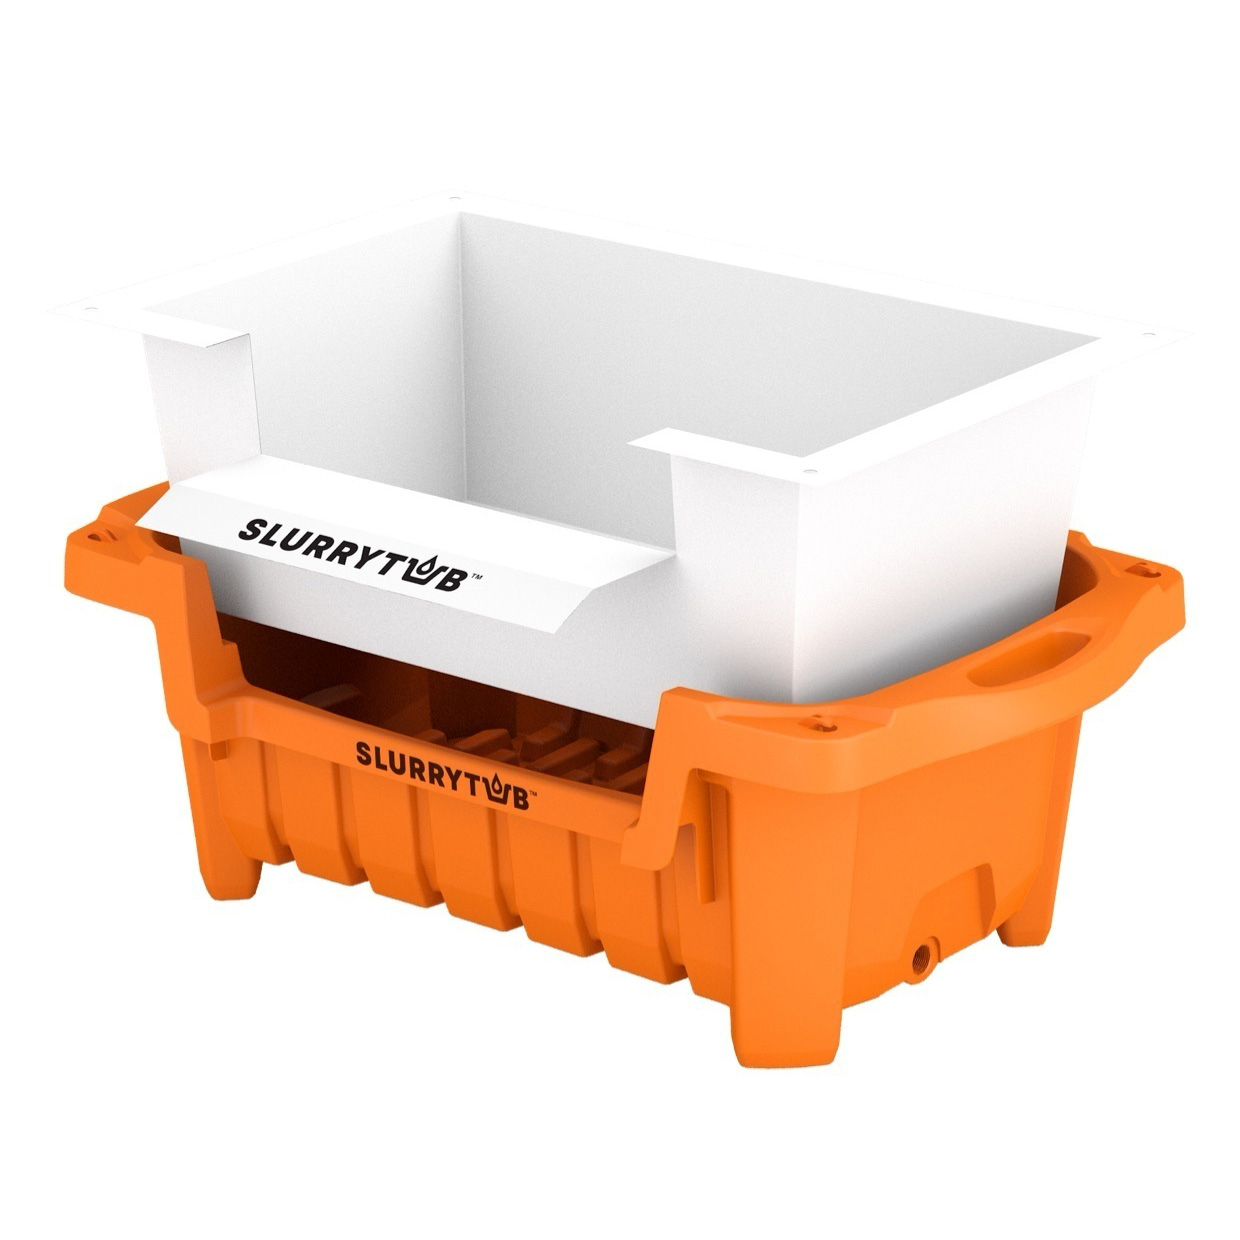 SLURRYTUB Trade Kit 1x Tub & 24x Filters